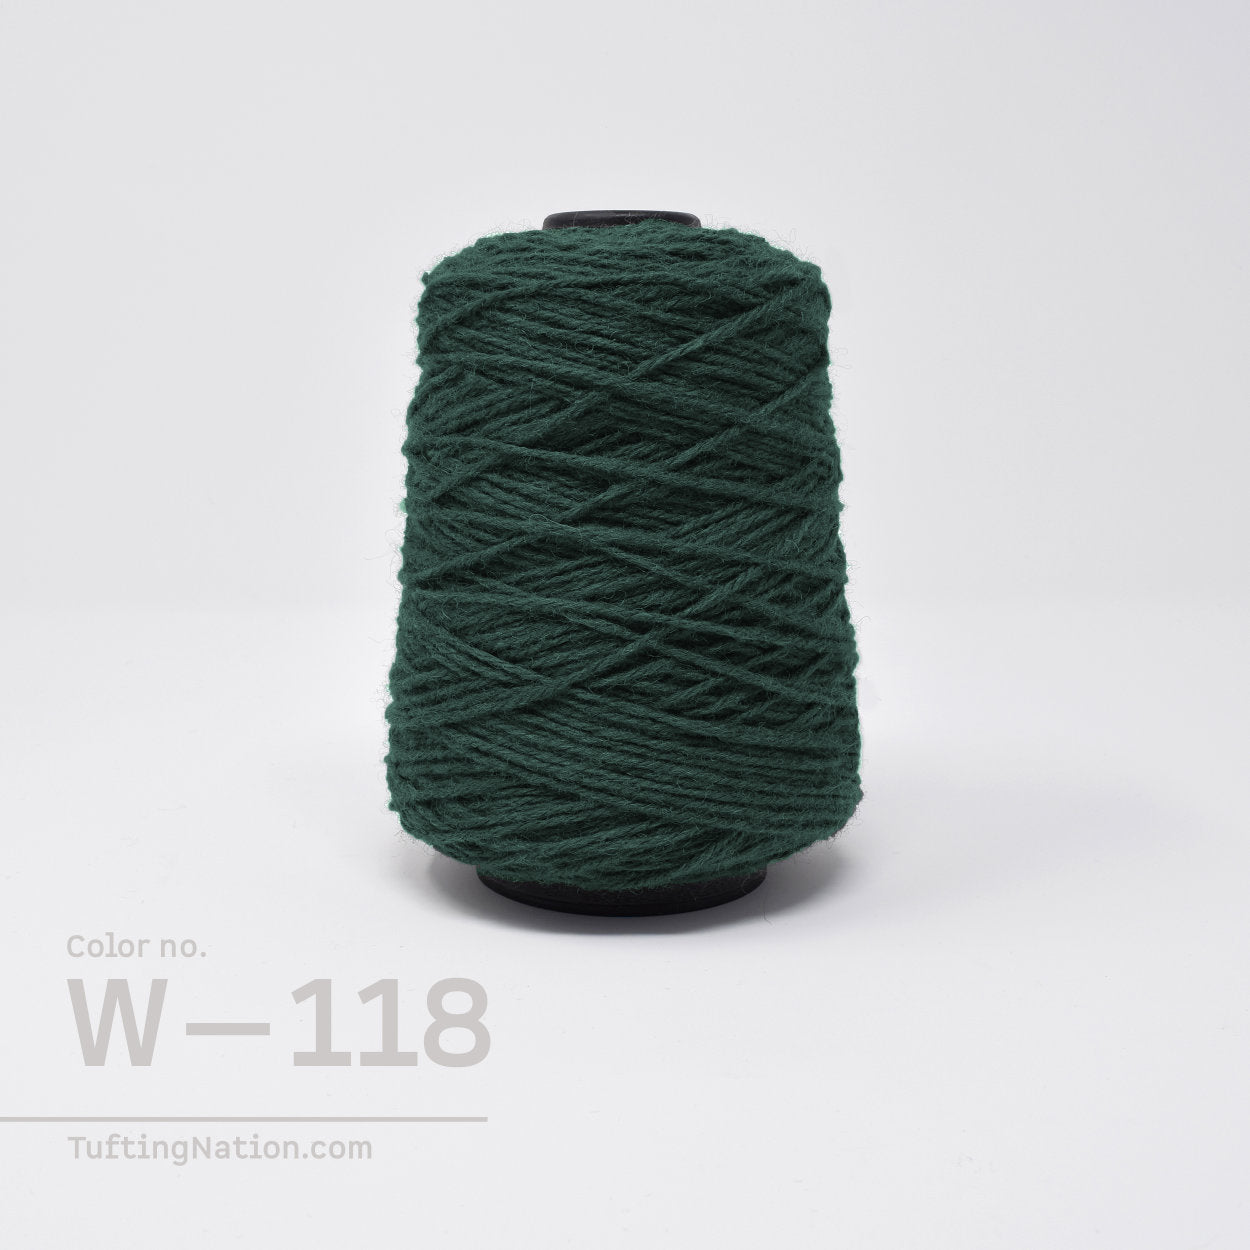 Dark Green Rug Yarn for Rug Tufting and Weaving | TuftingNation